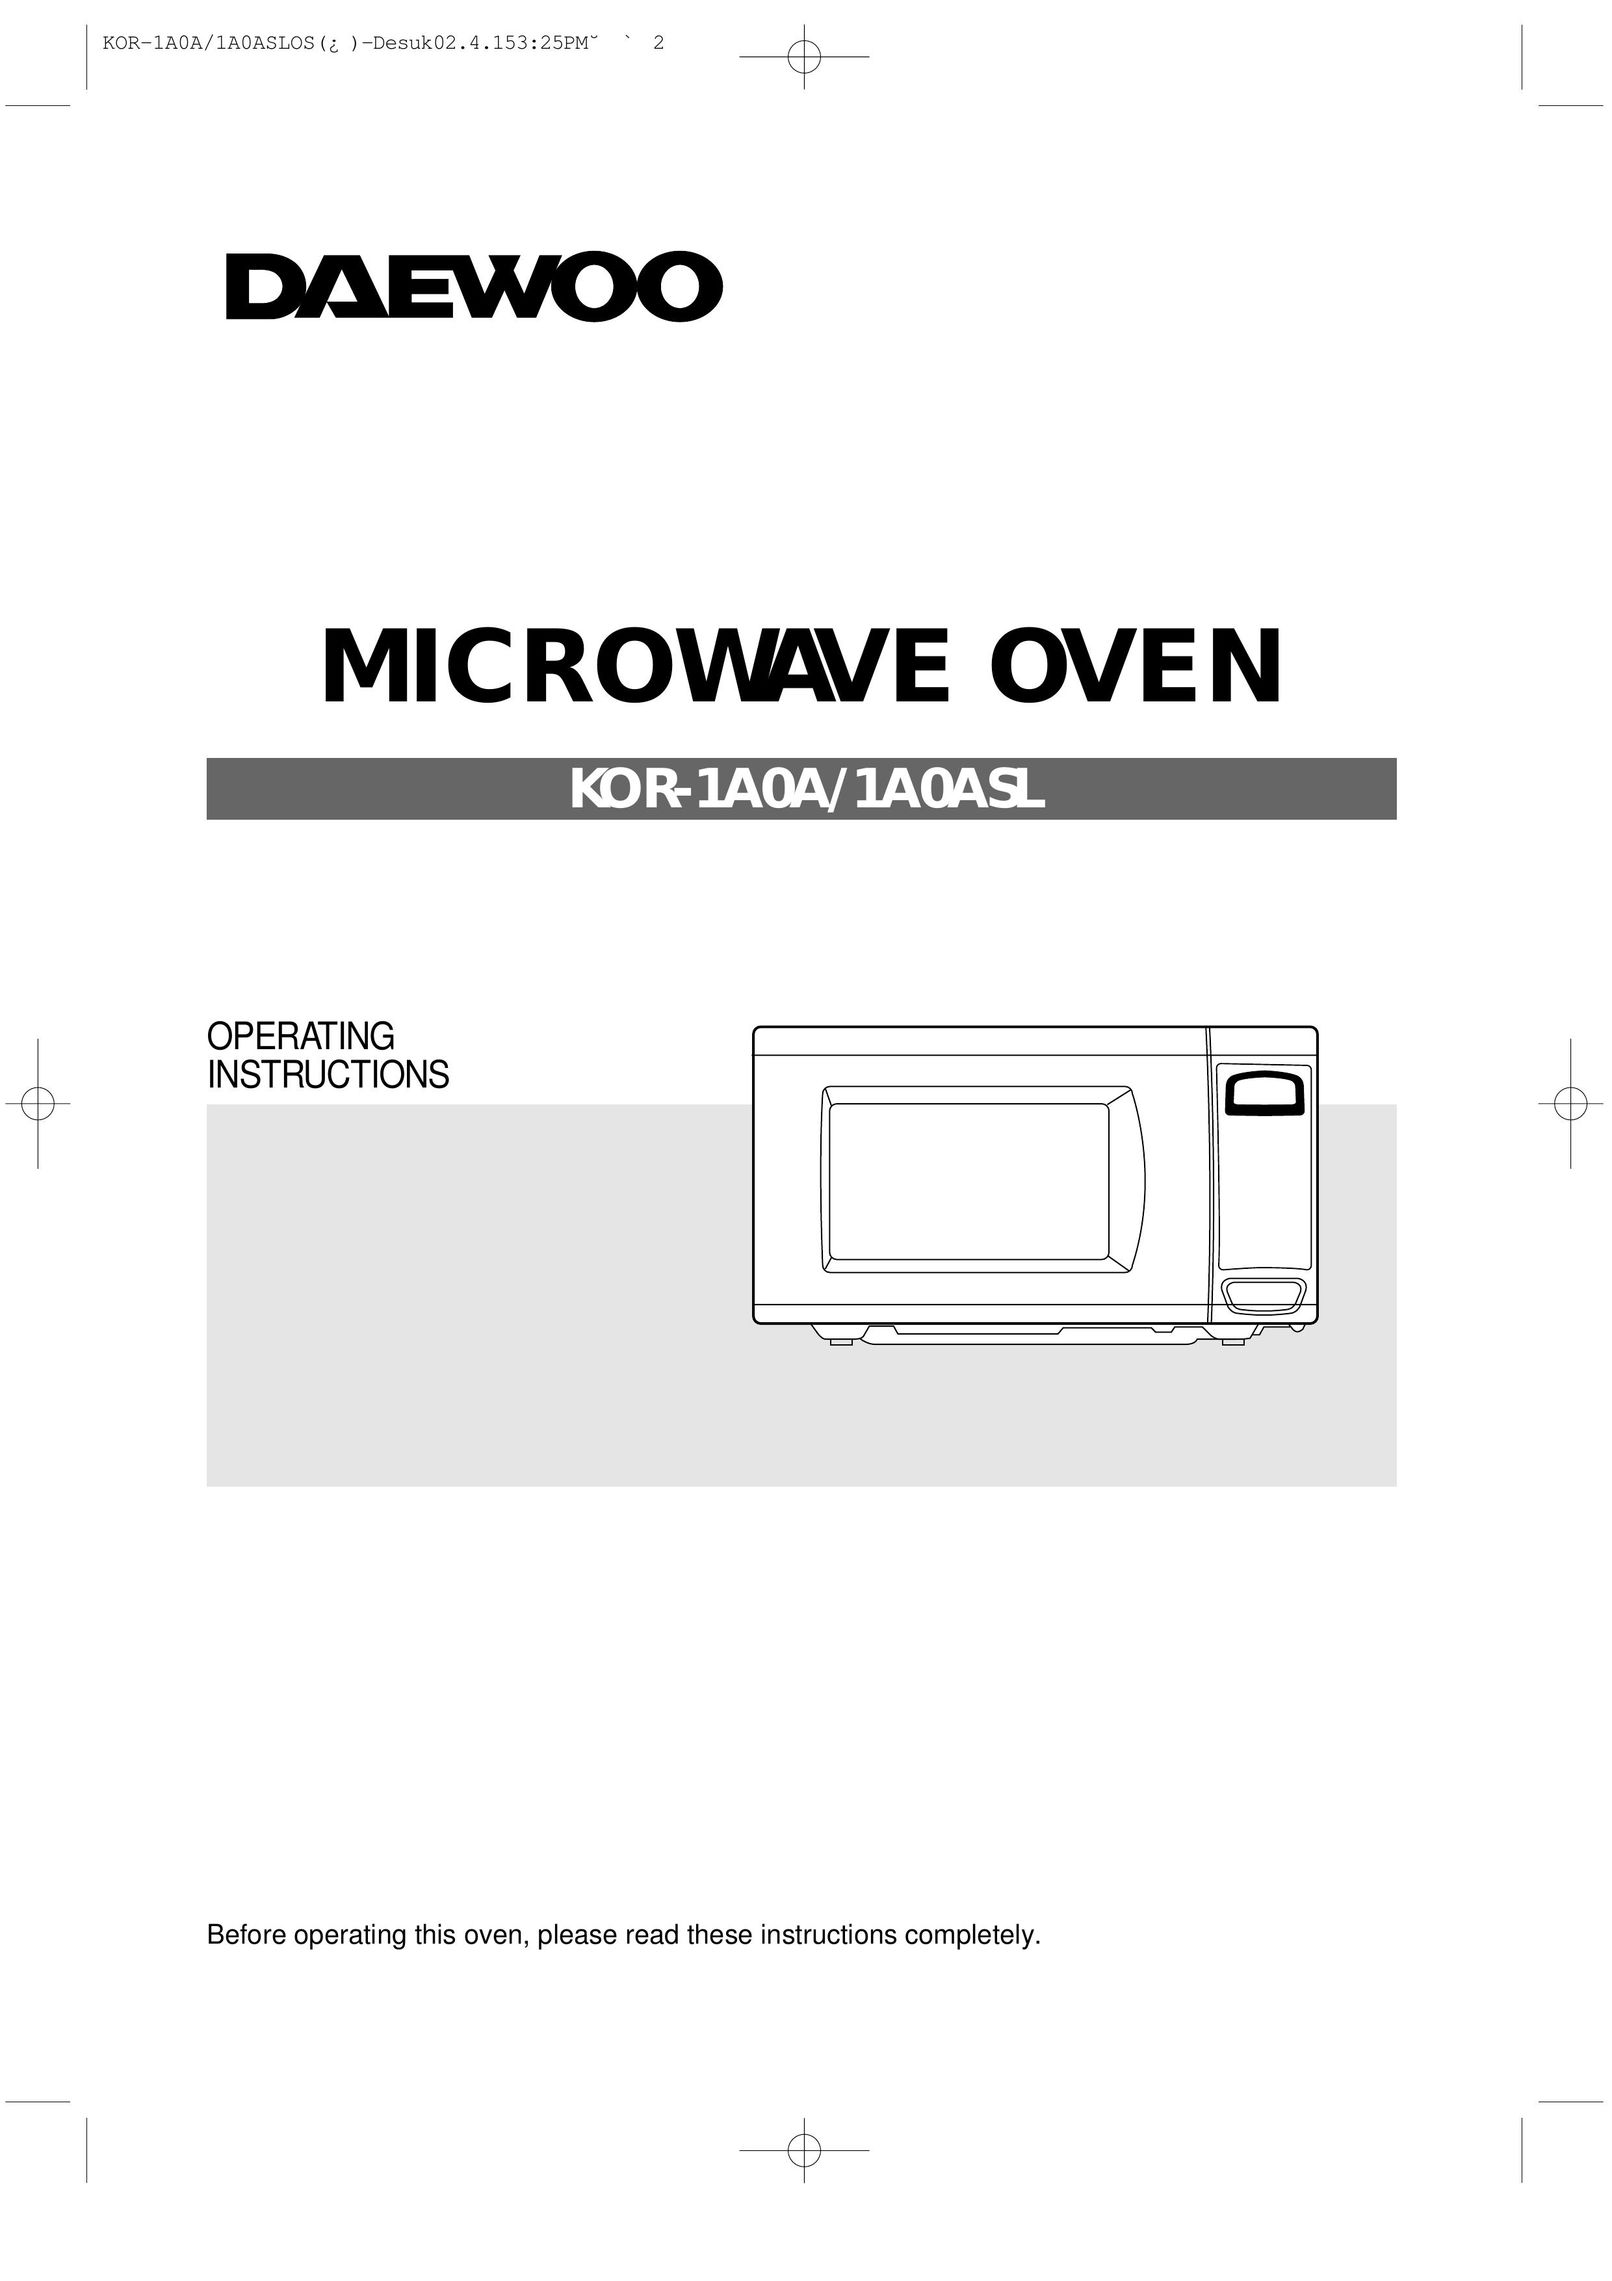 Daewoo KOR-1A0A Microwave Oven User Manual